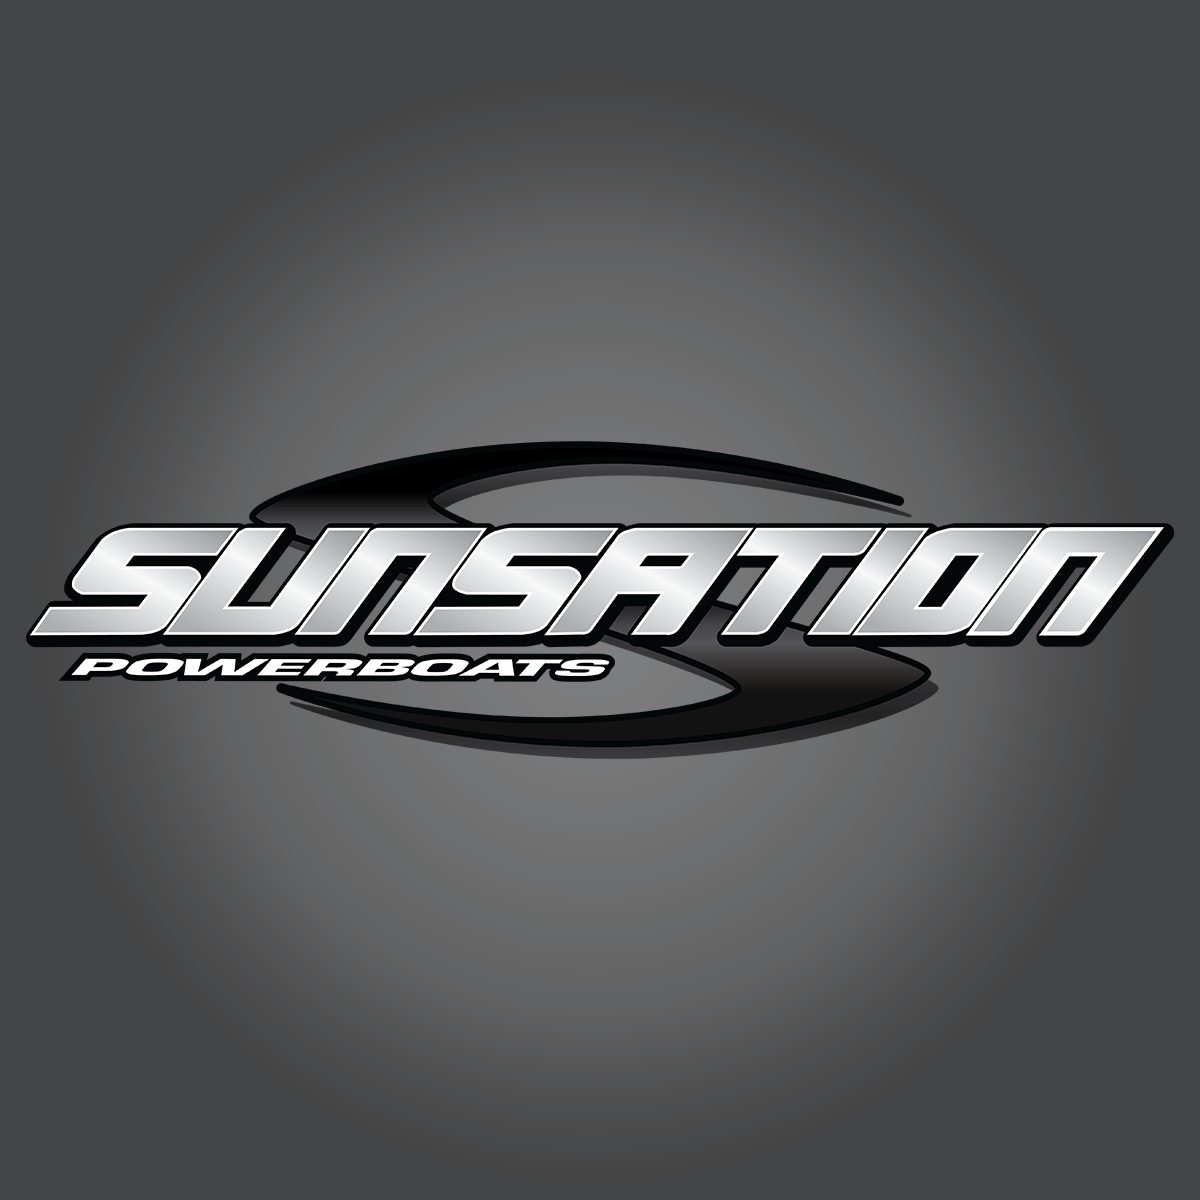 Sunsation logo